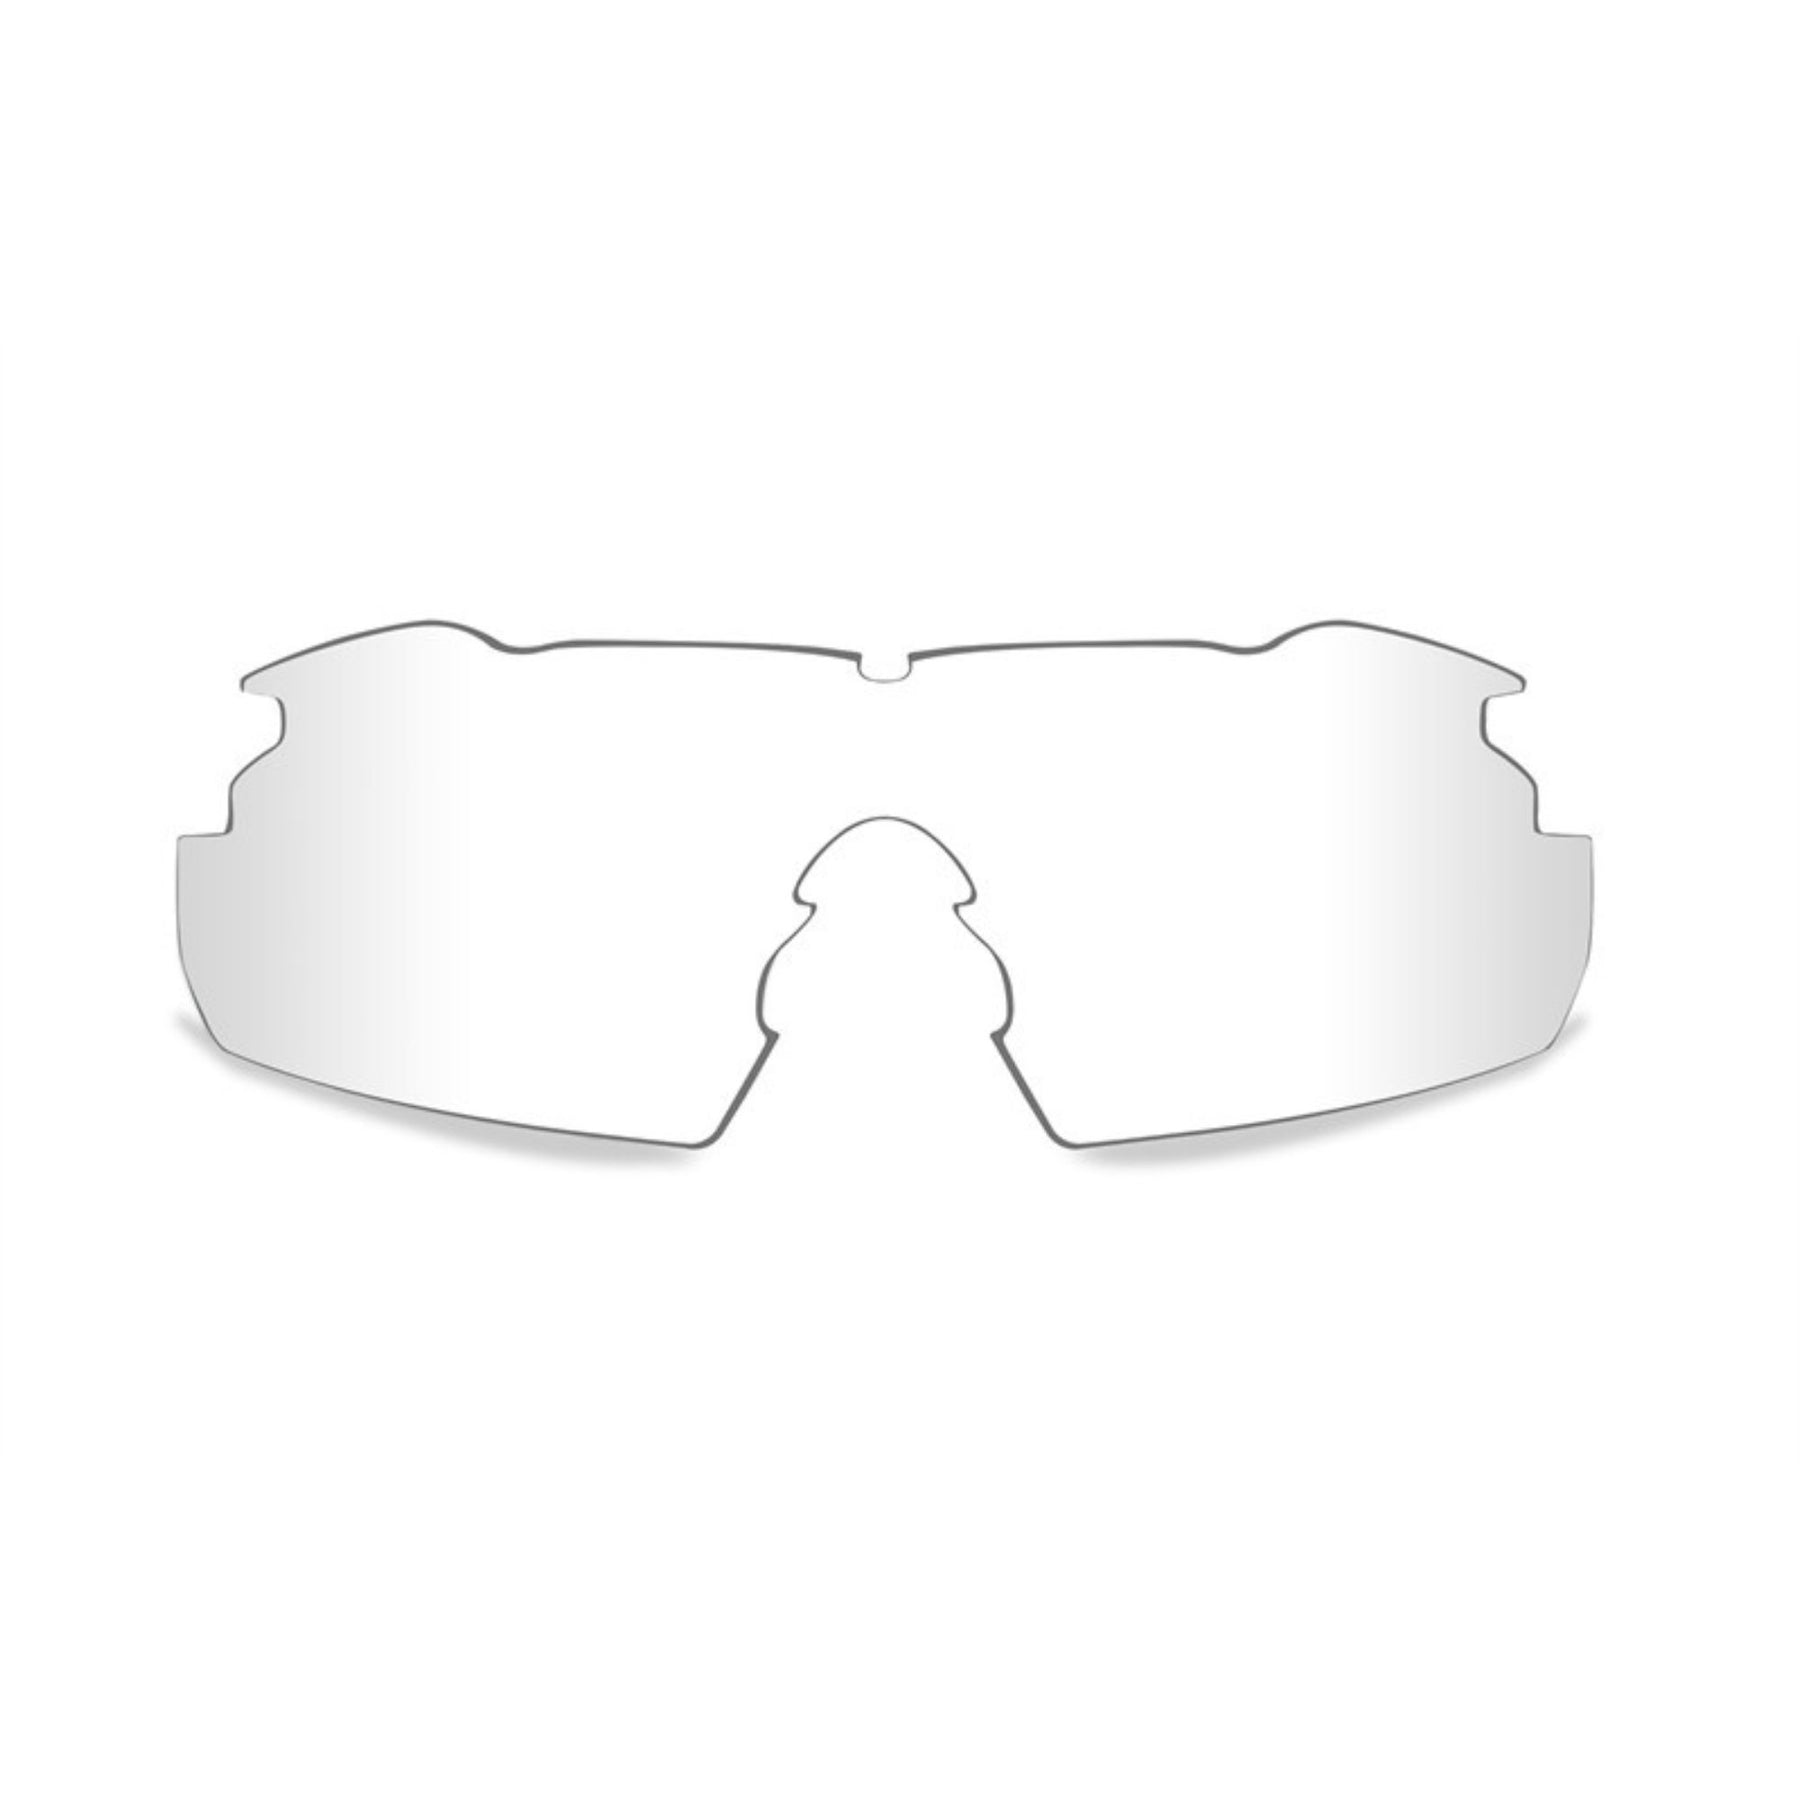 WILEYX | WX VAPOR 2.5 Mod 3502 - Occhiali balistici con 3 set di lenti